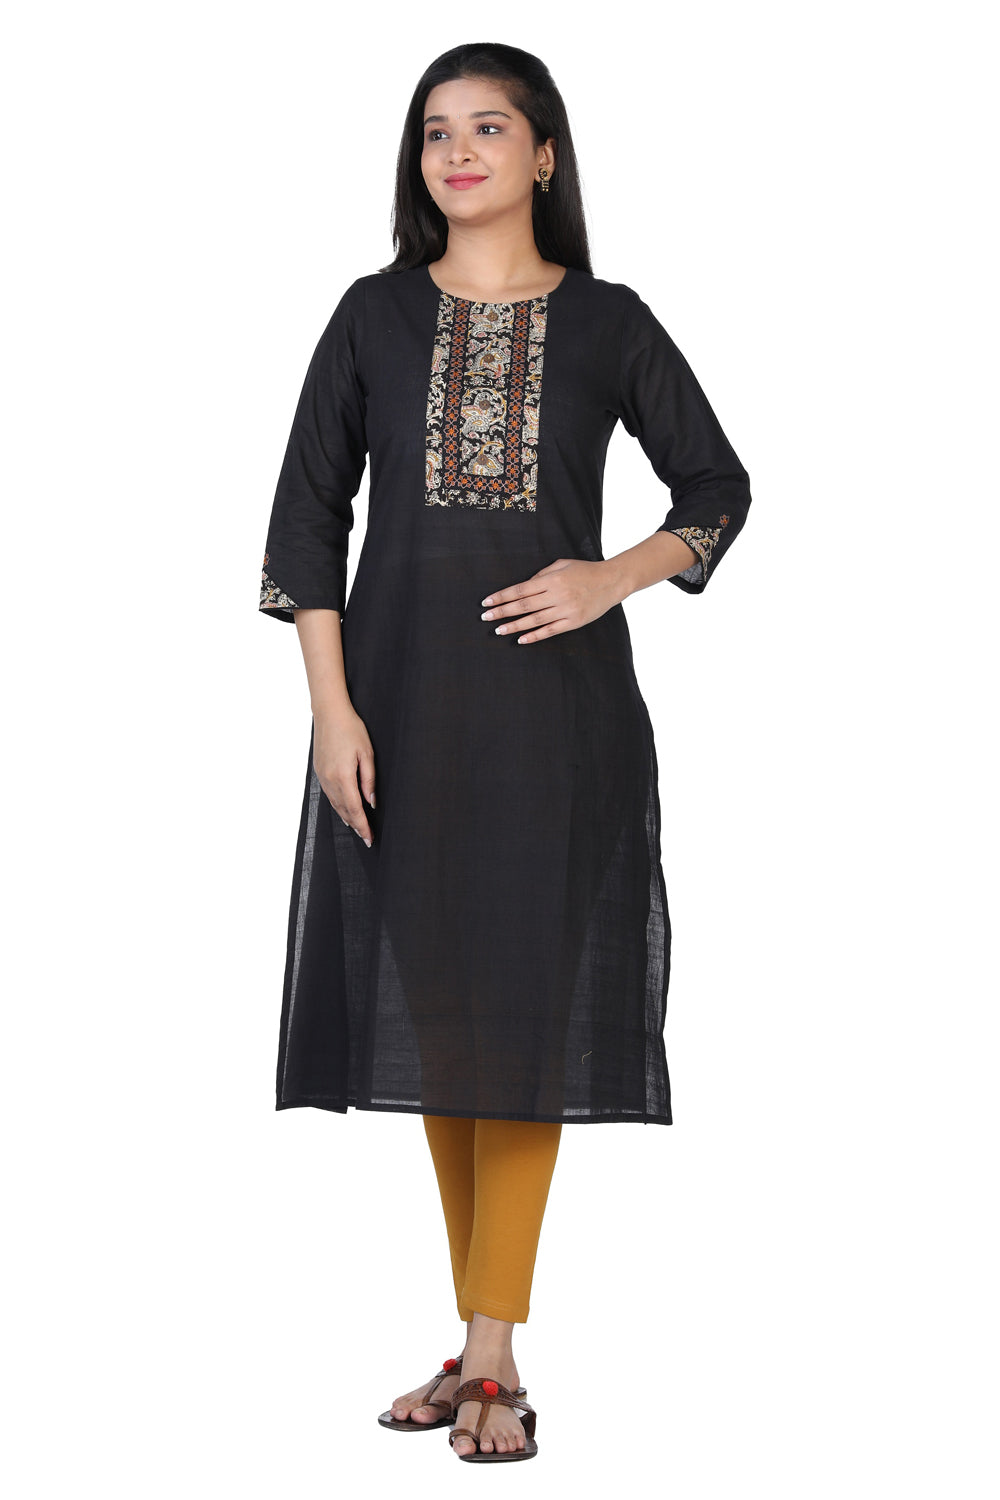 Black mangalgiri cotton kurti with kalamkari print and ethnic thread embroidery.